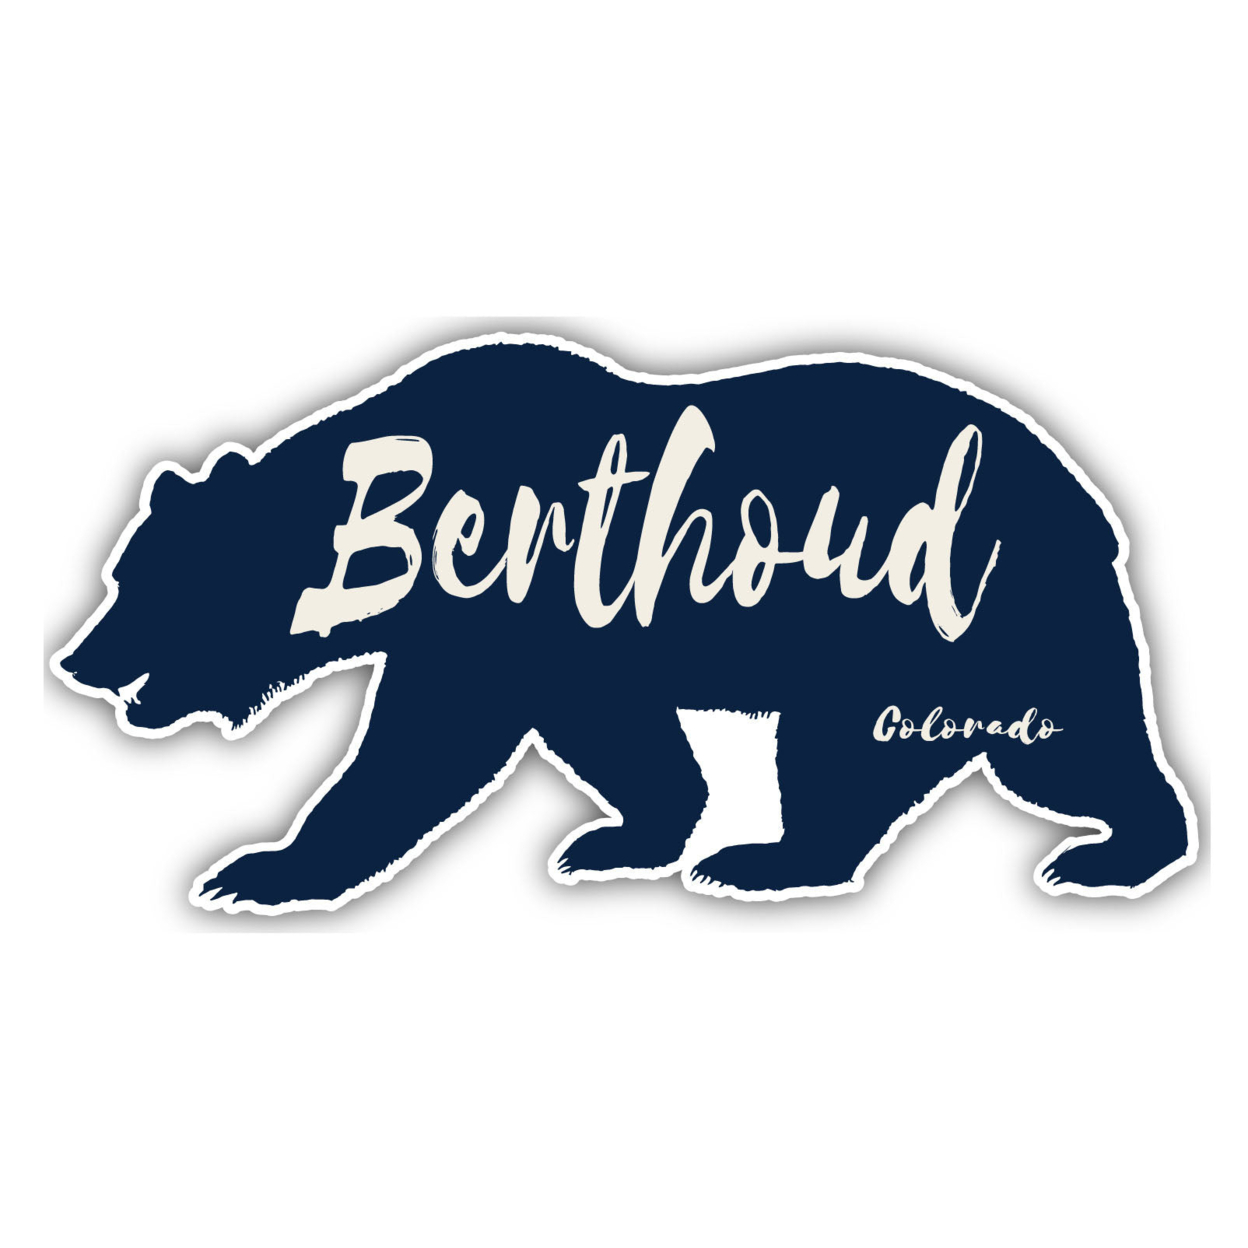 Berthoud Colorado Souvenir Decorative Stickers (Choose Theme And Size) - 4-Pack, 4-Inch, Bear